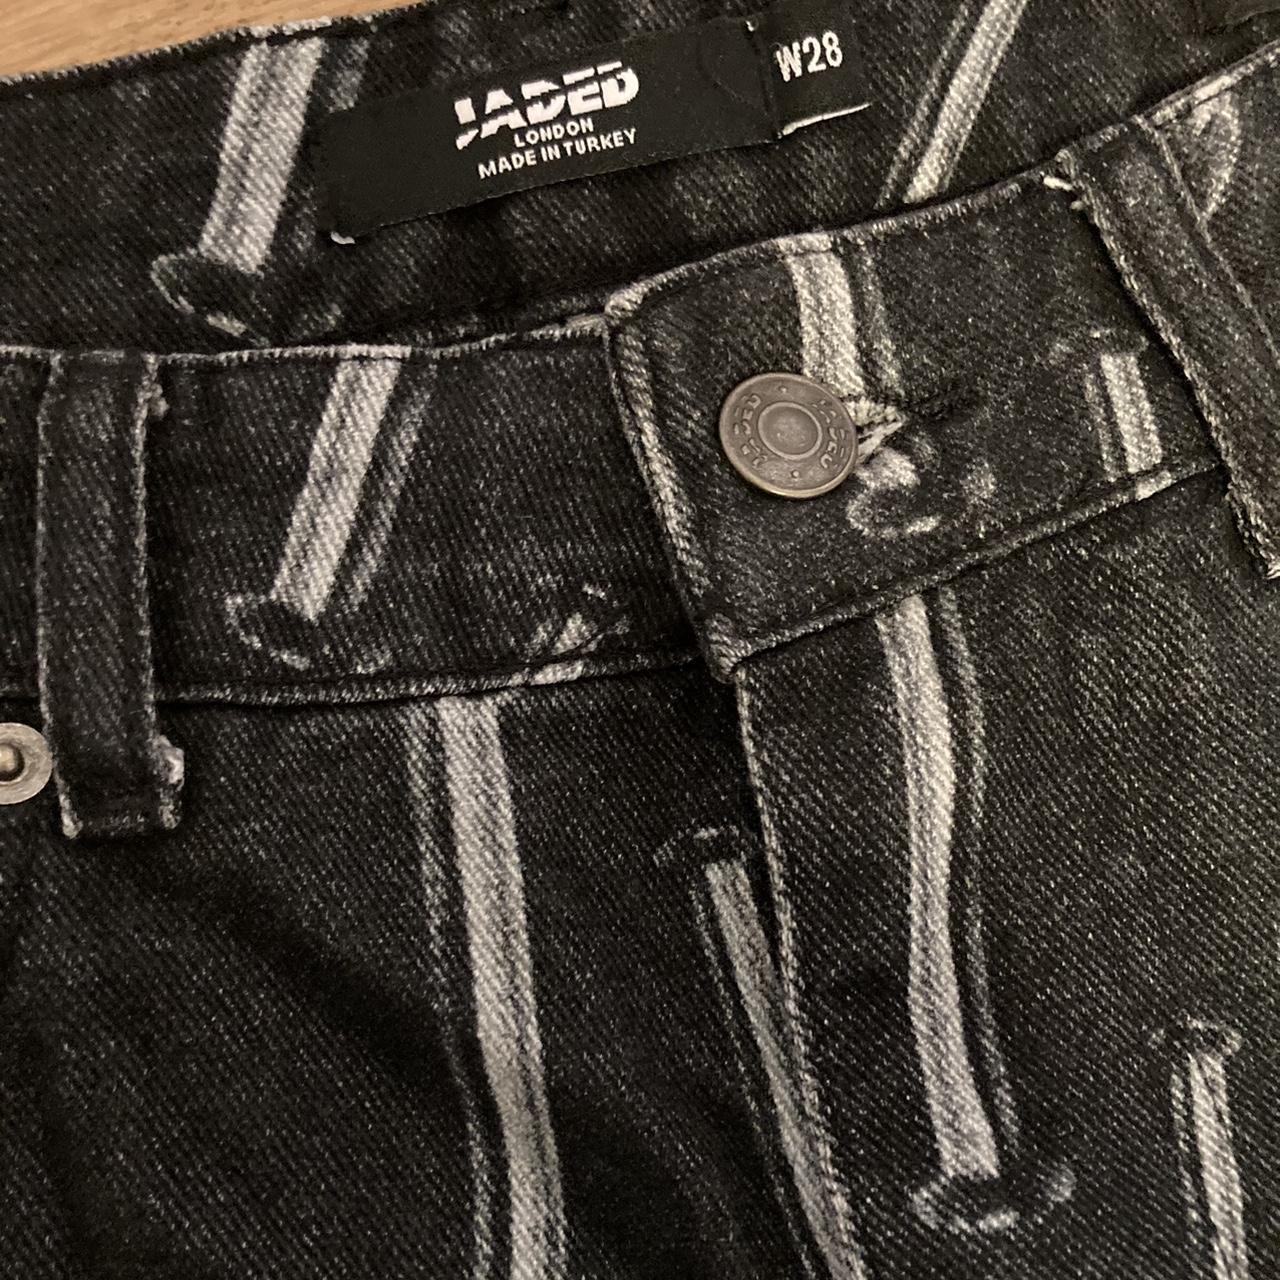 Jaded London Men's Black and Grey Jeans | Depop